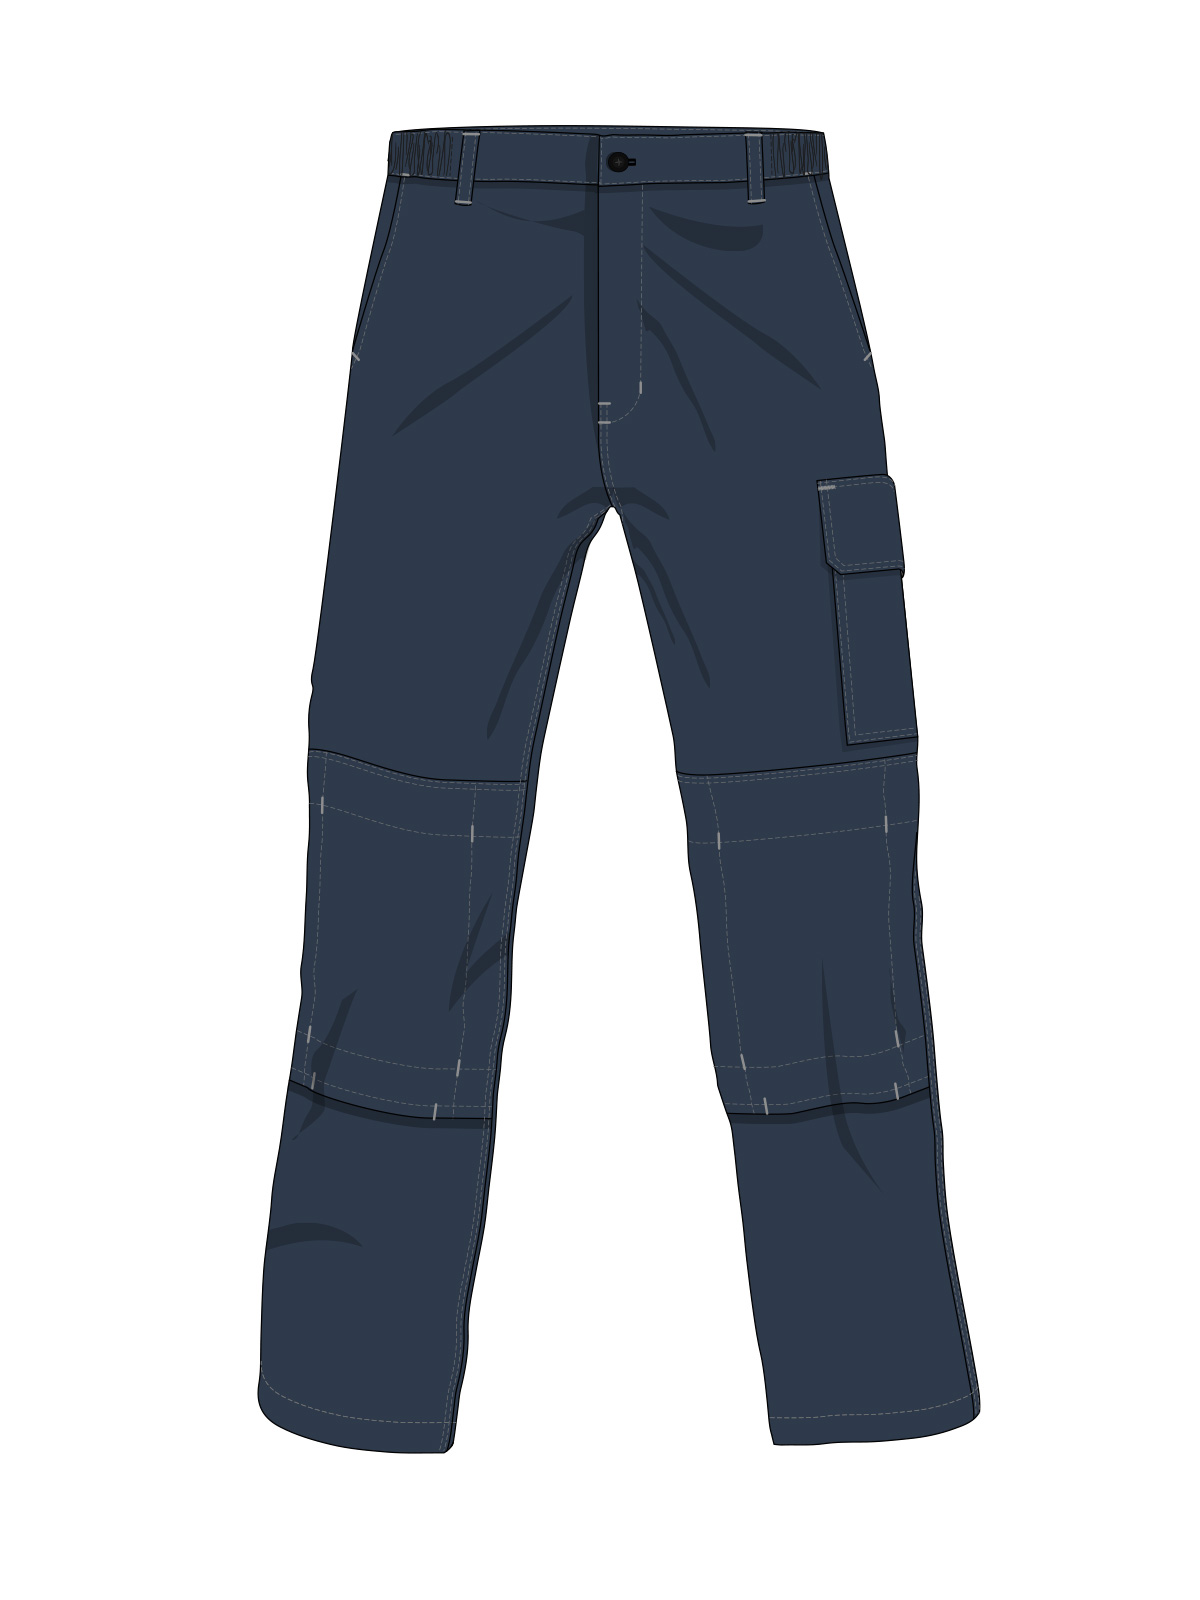 Metaal Fire Resistant Trousers